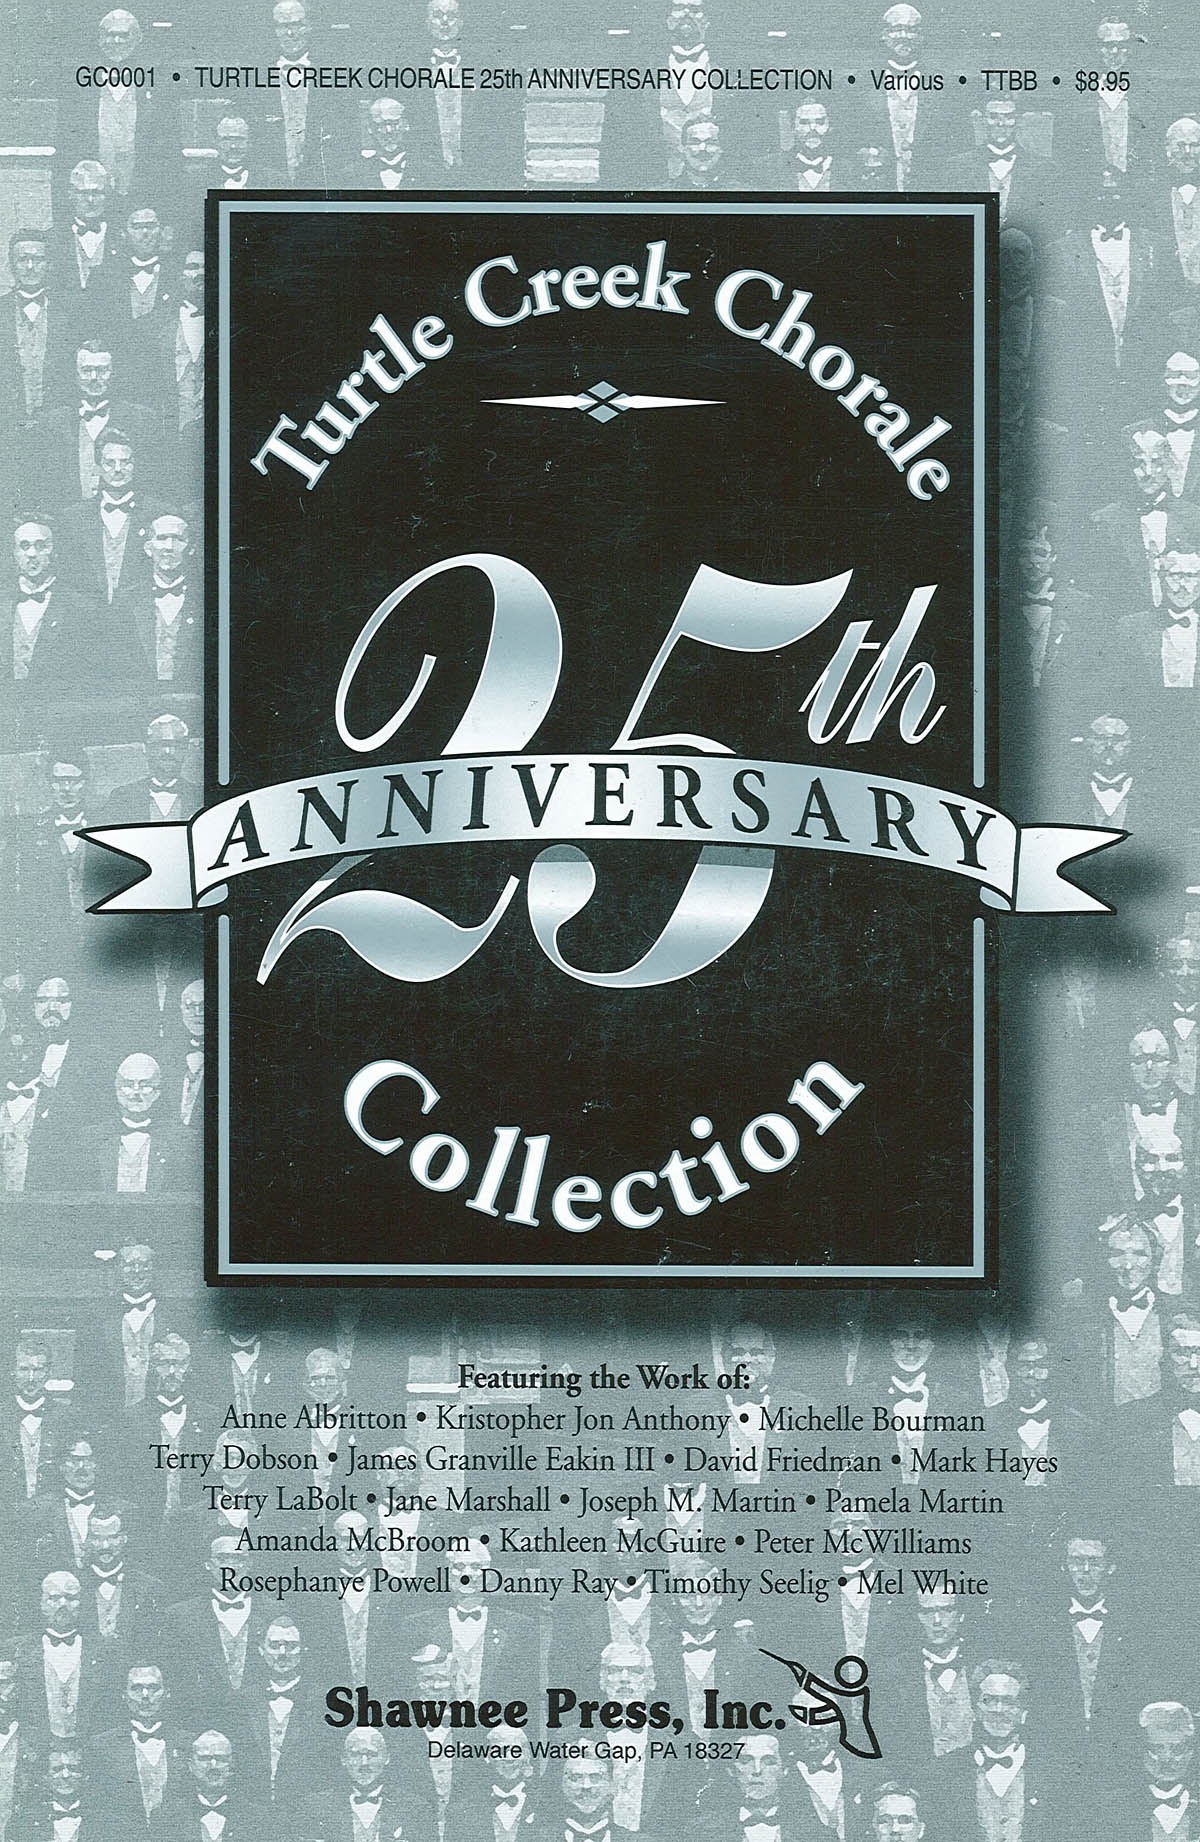 The Turtle Creek Chorale Collection: TTBB: Vocal Score